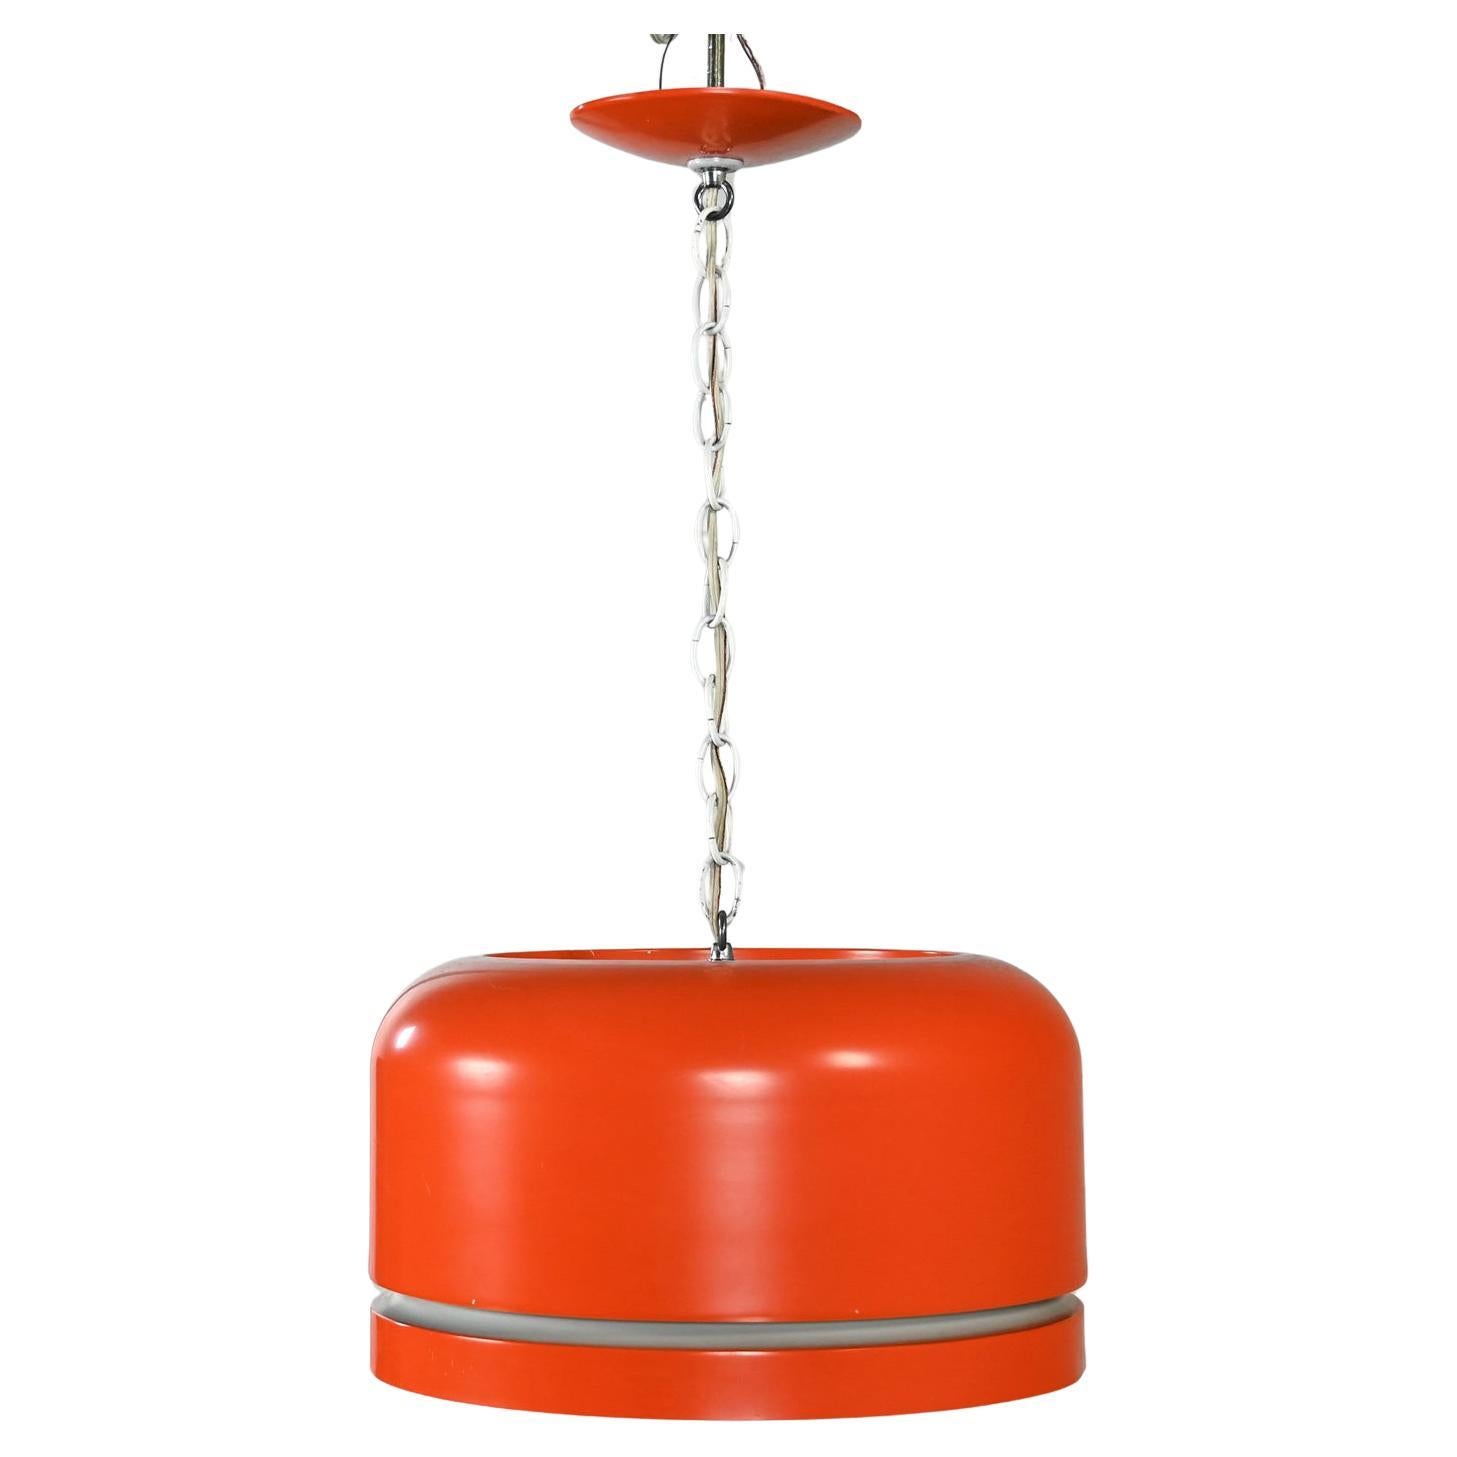 Mid Century Modern Orange Dome Pendant Hanging Light Fixture by Lightolier For Sale